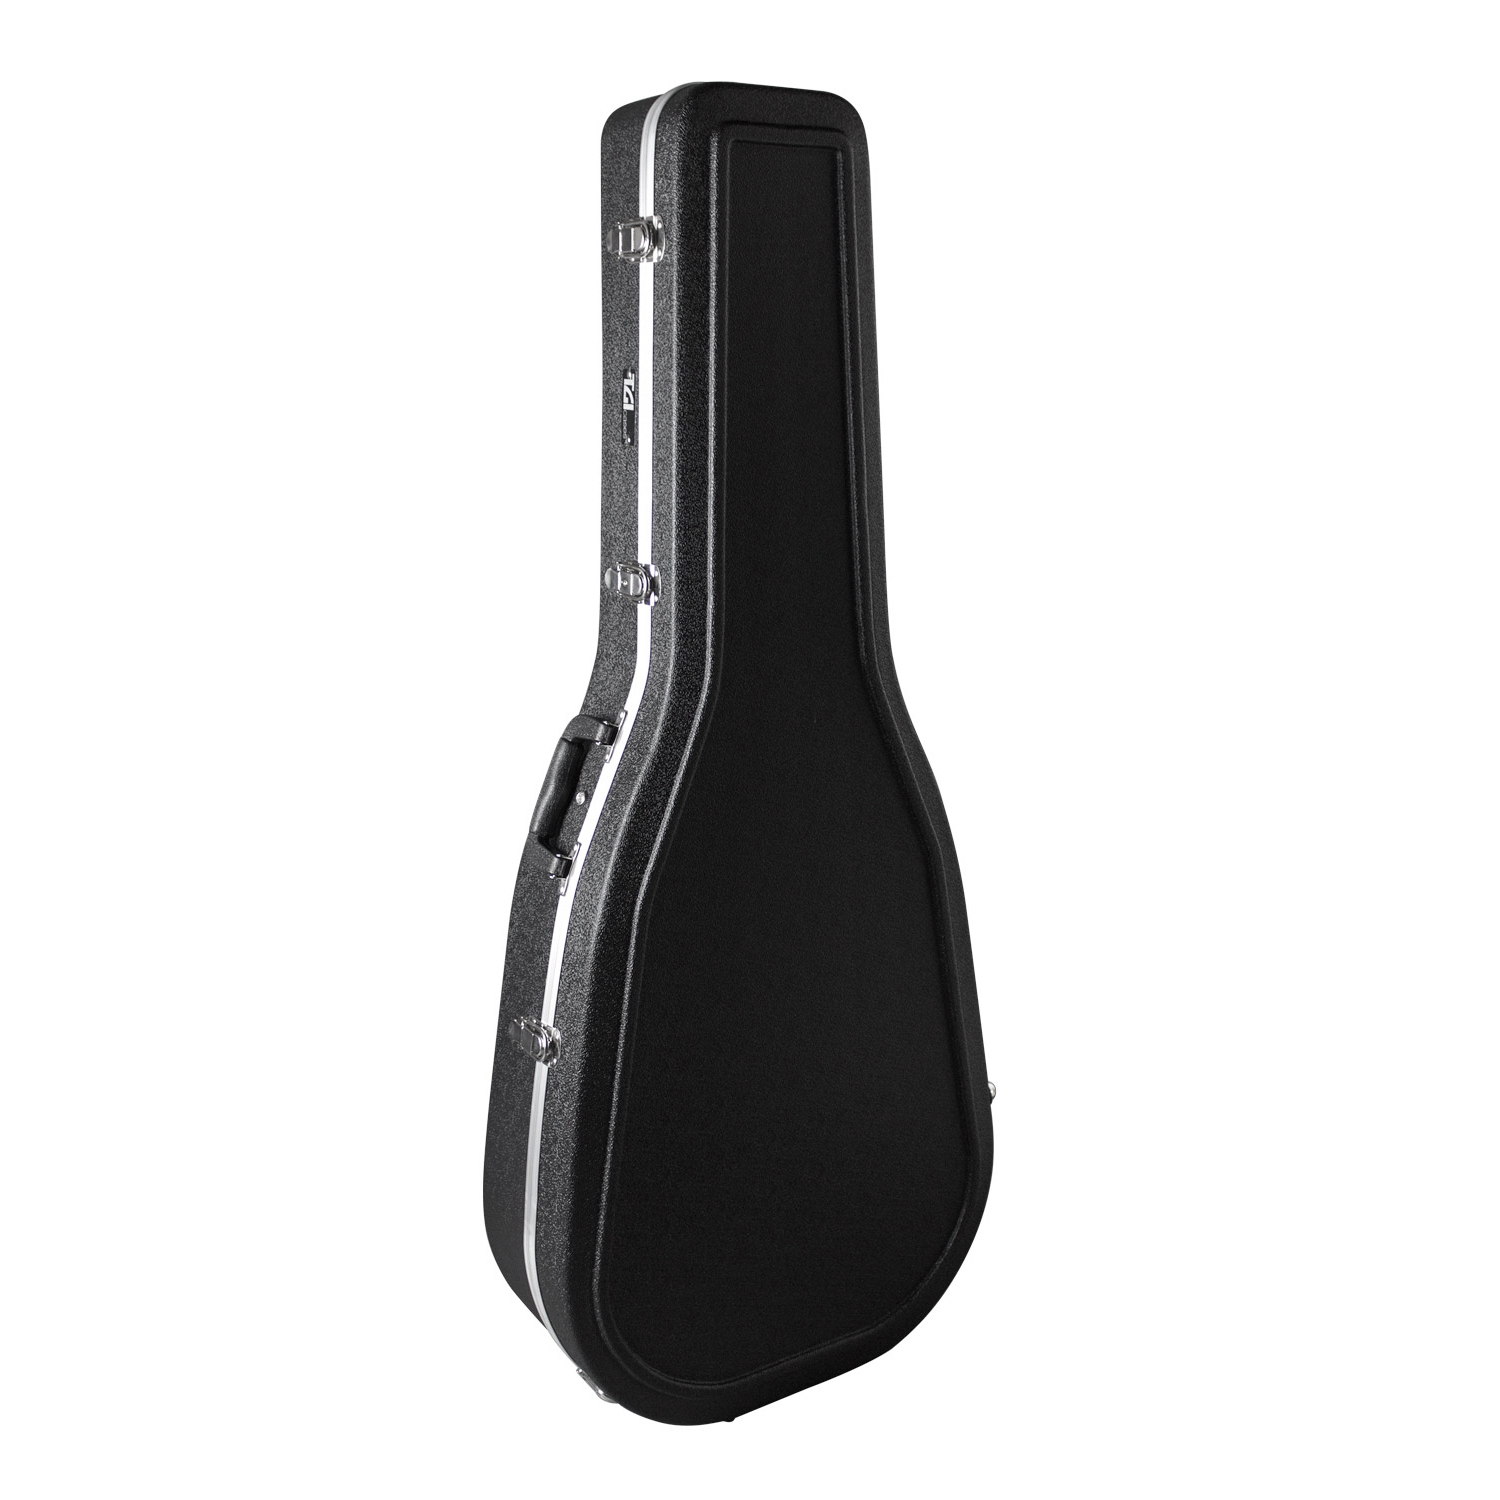 TGI Case ABS Classical Guitar. Black